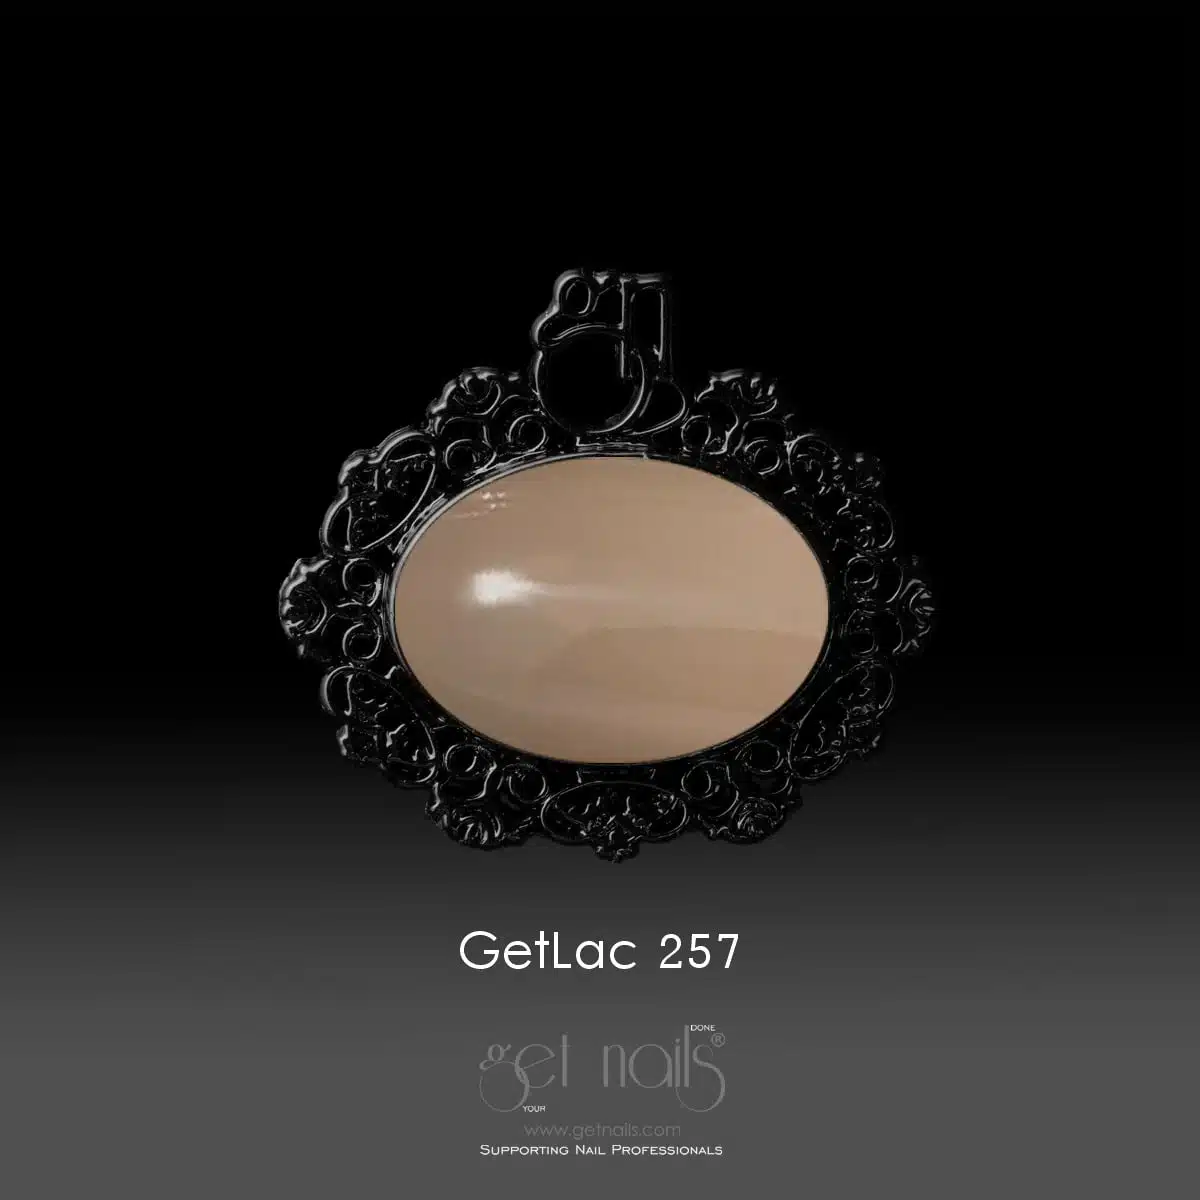 Get Nails Austria - GetLac 257 15г